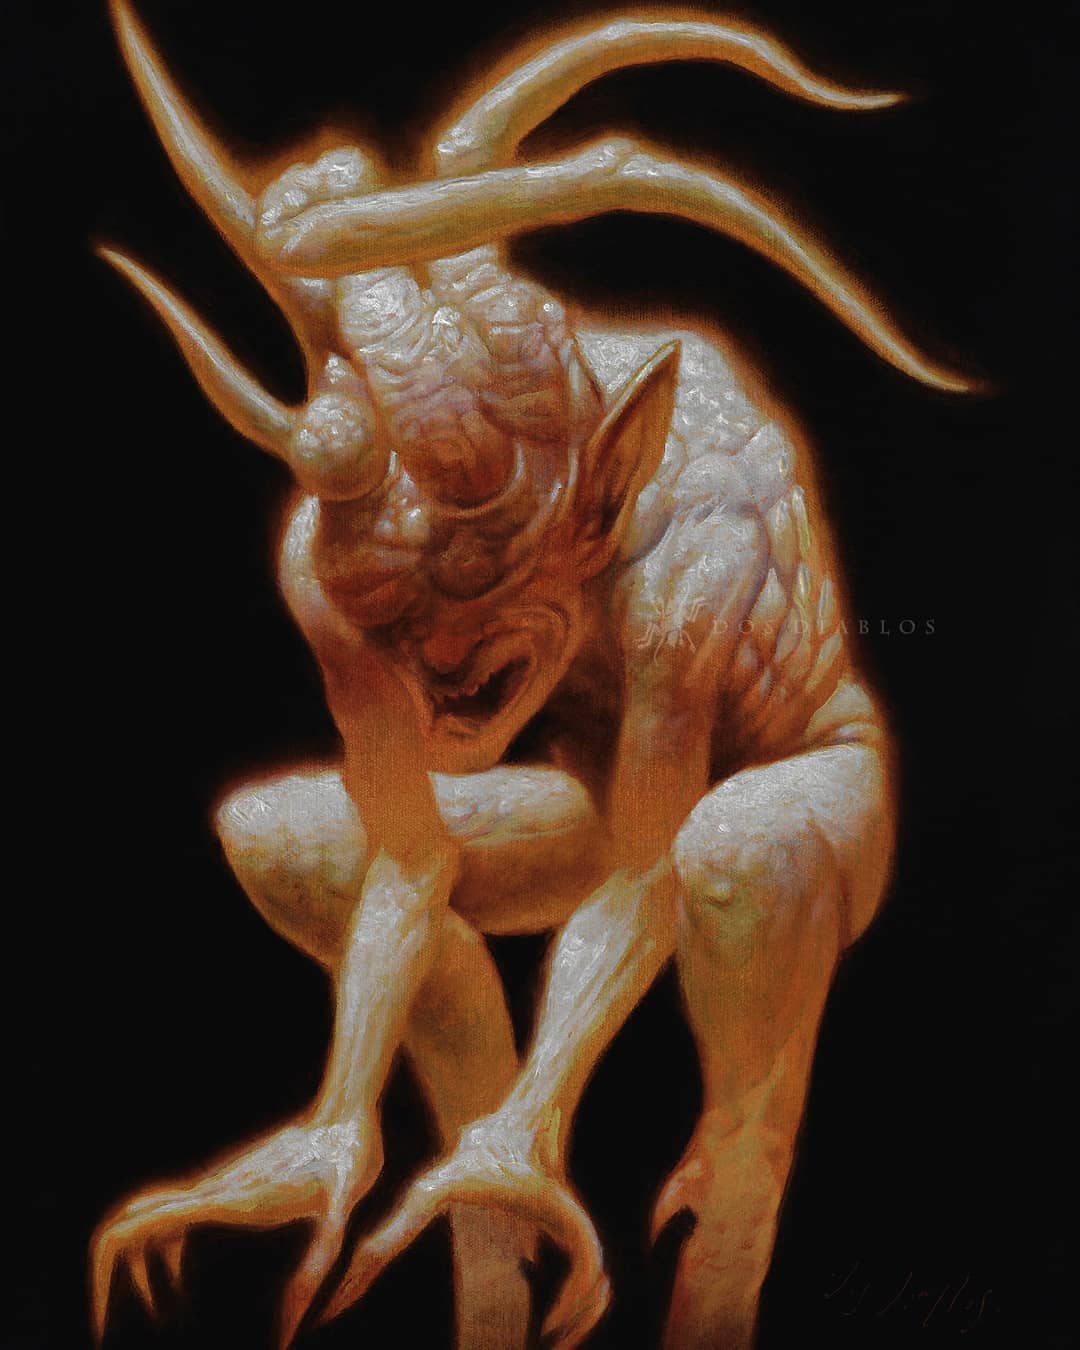 Grotesque But Delightful Portraits Of Diabolic Creatures By Jorge Dos Diablos 16